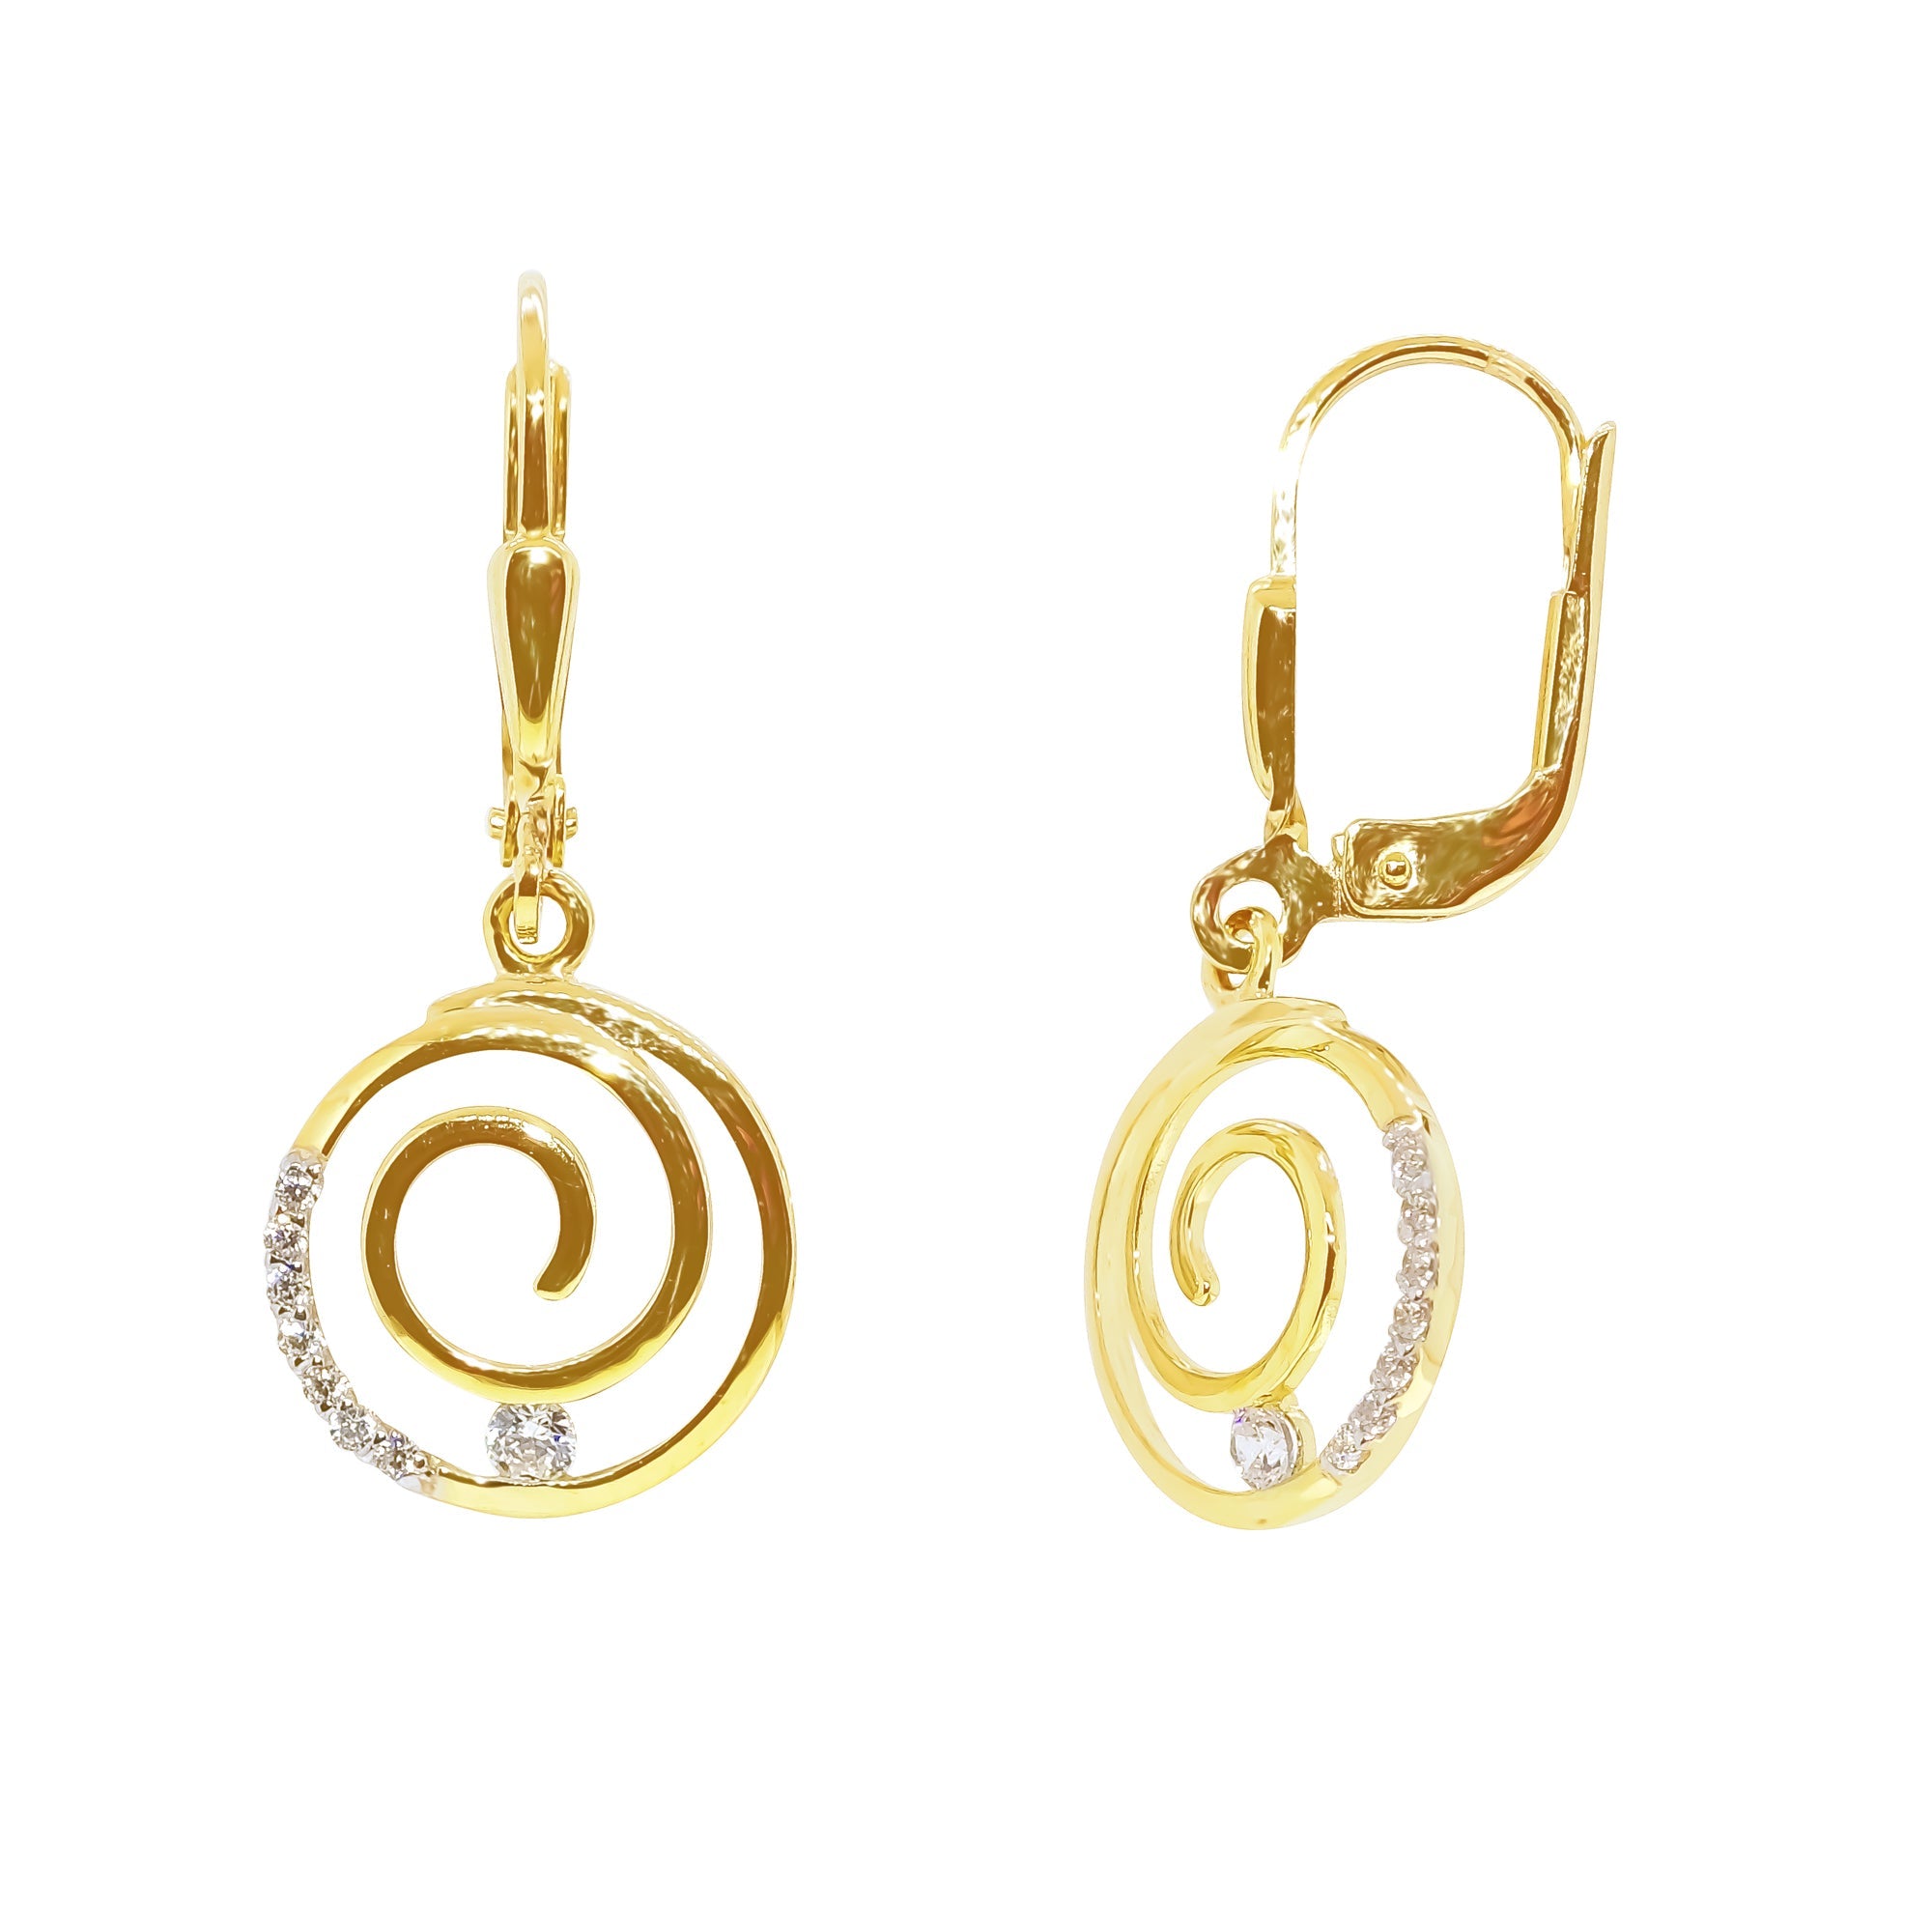 9ct gold cz circles earrings